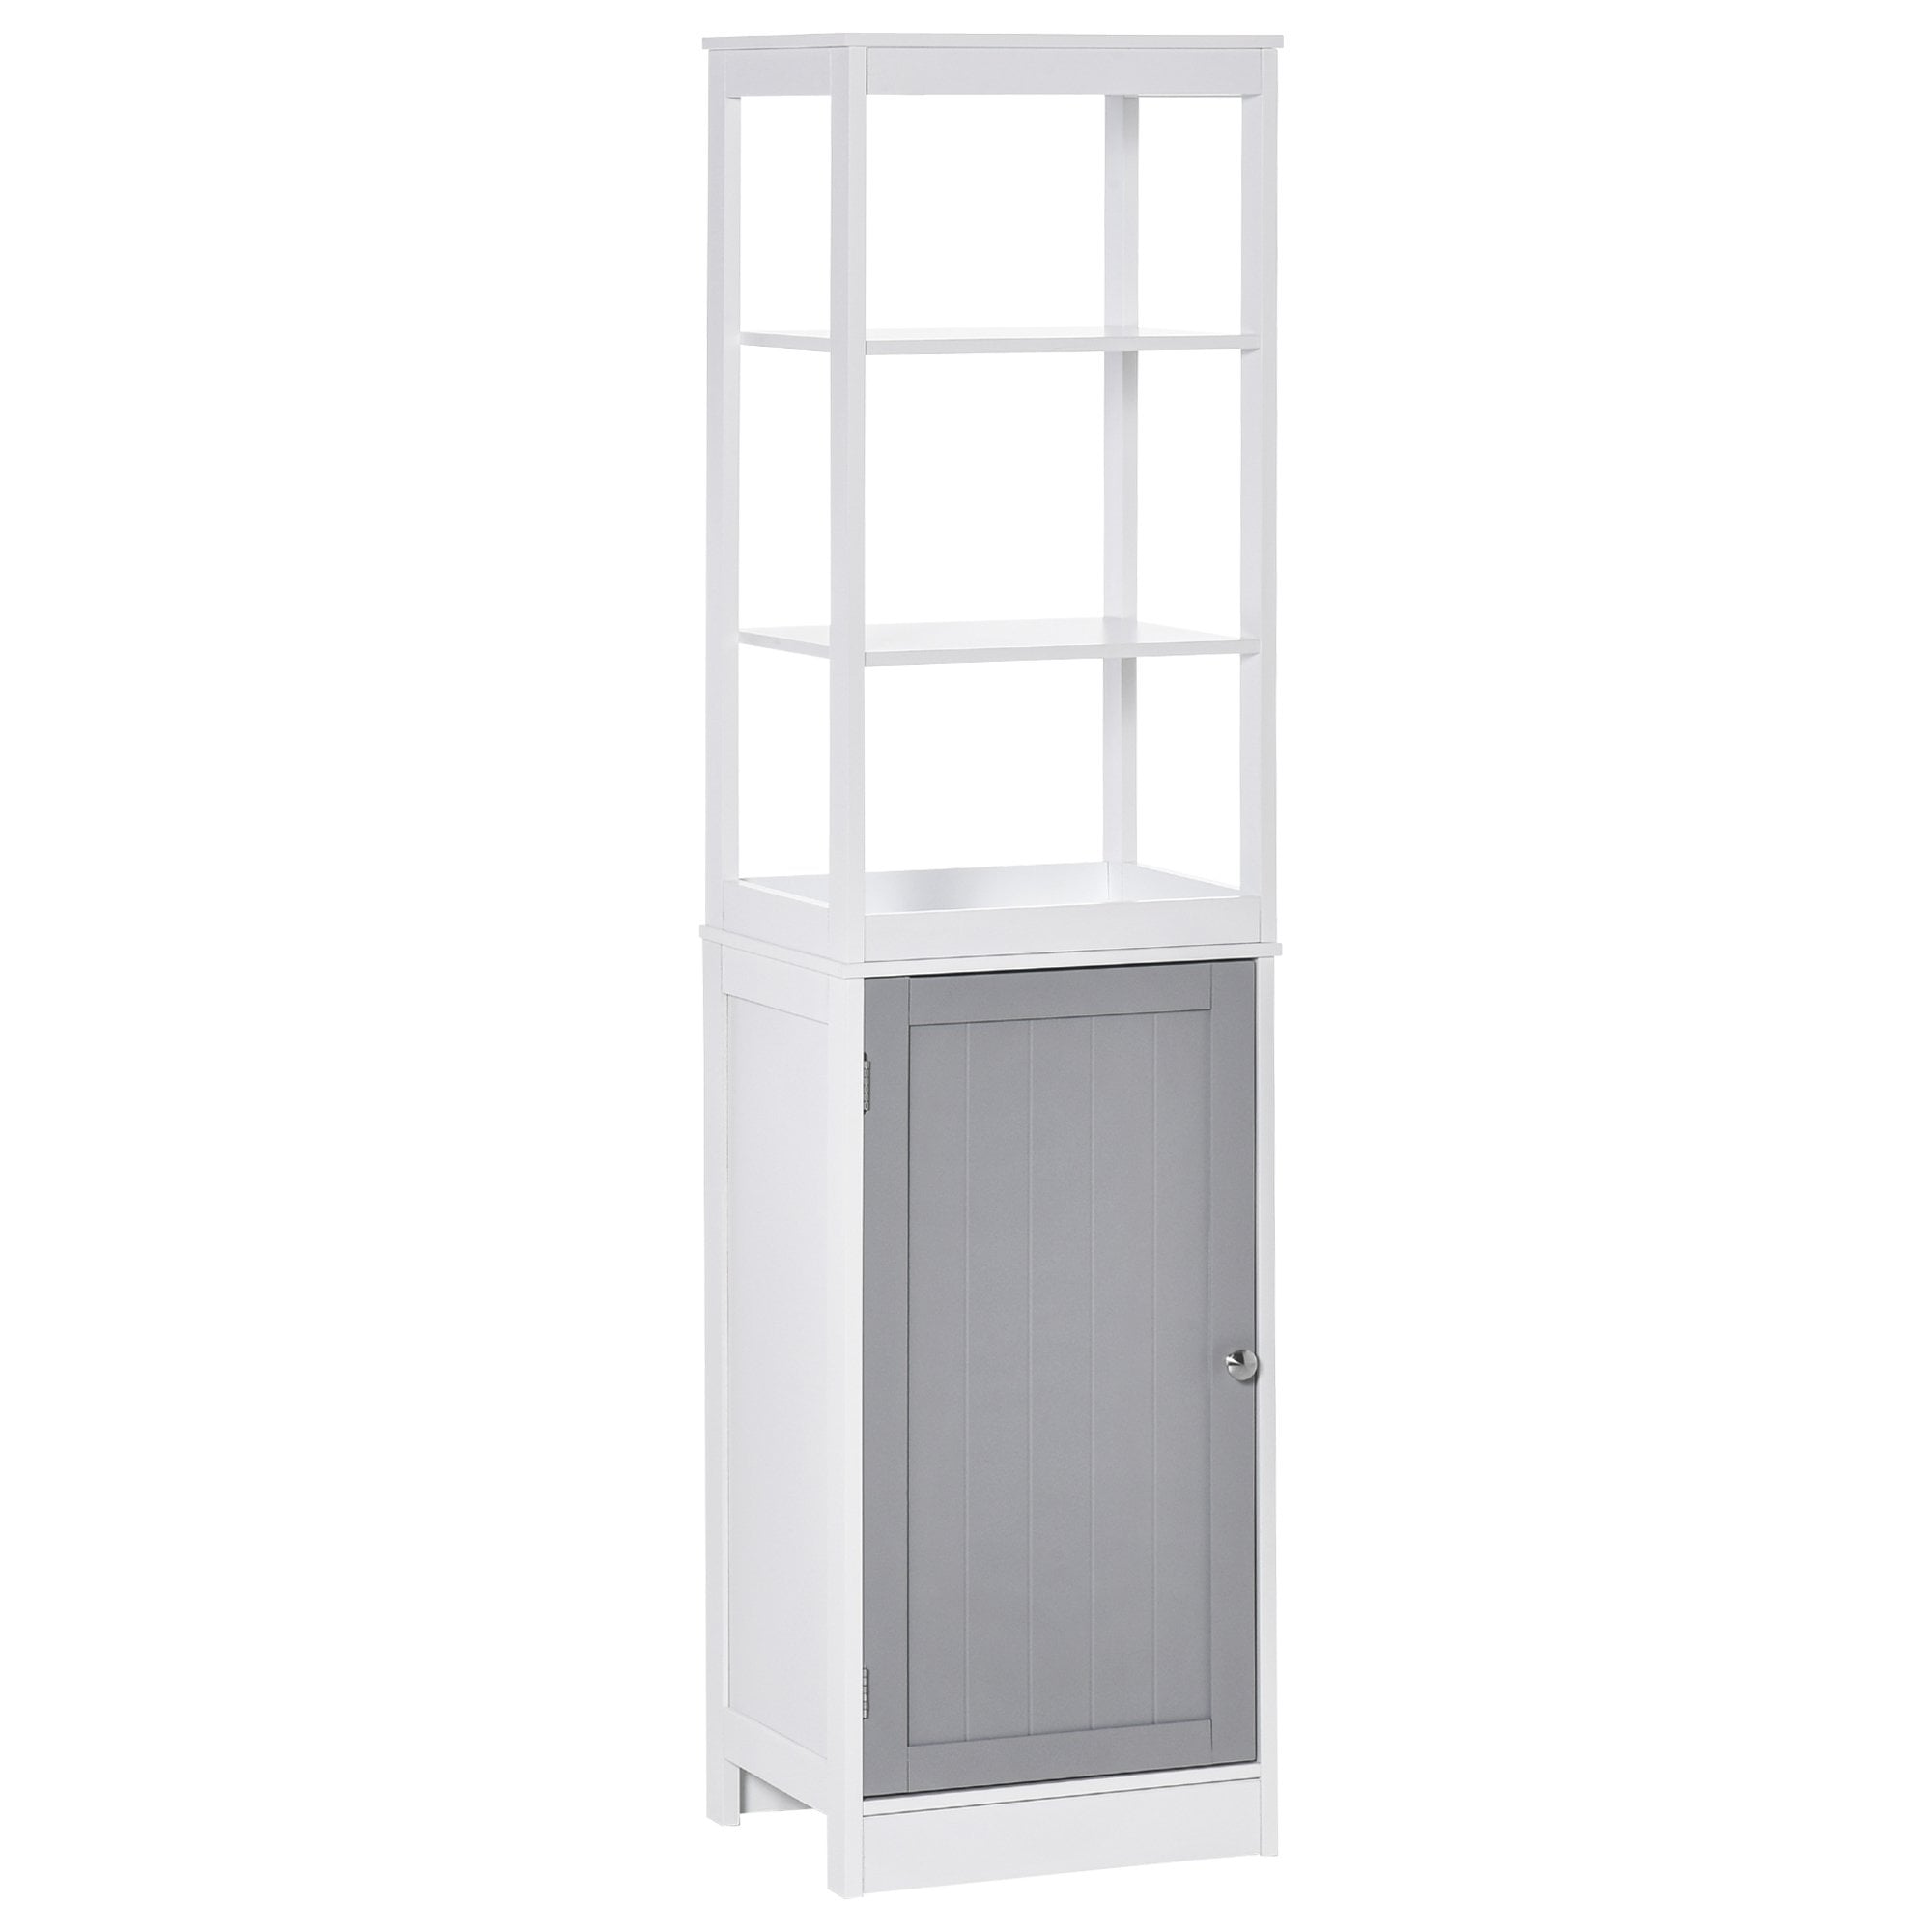 kleankin Tall Bathroom Cabinet Free Standing Slimline Cupboard Tallboy Unit Storage Organiser for Bathroom - Living Room - Kitchen Tower w/ - Home Liv